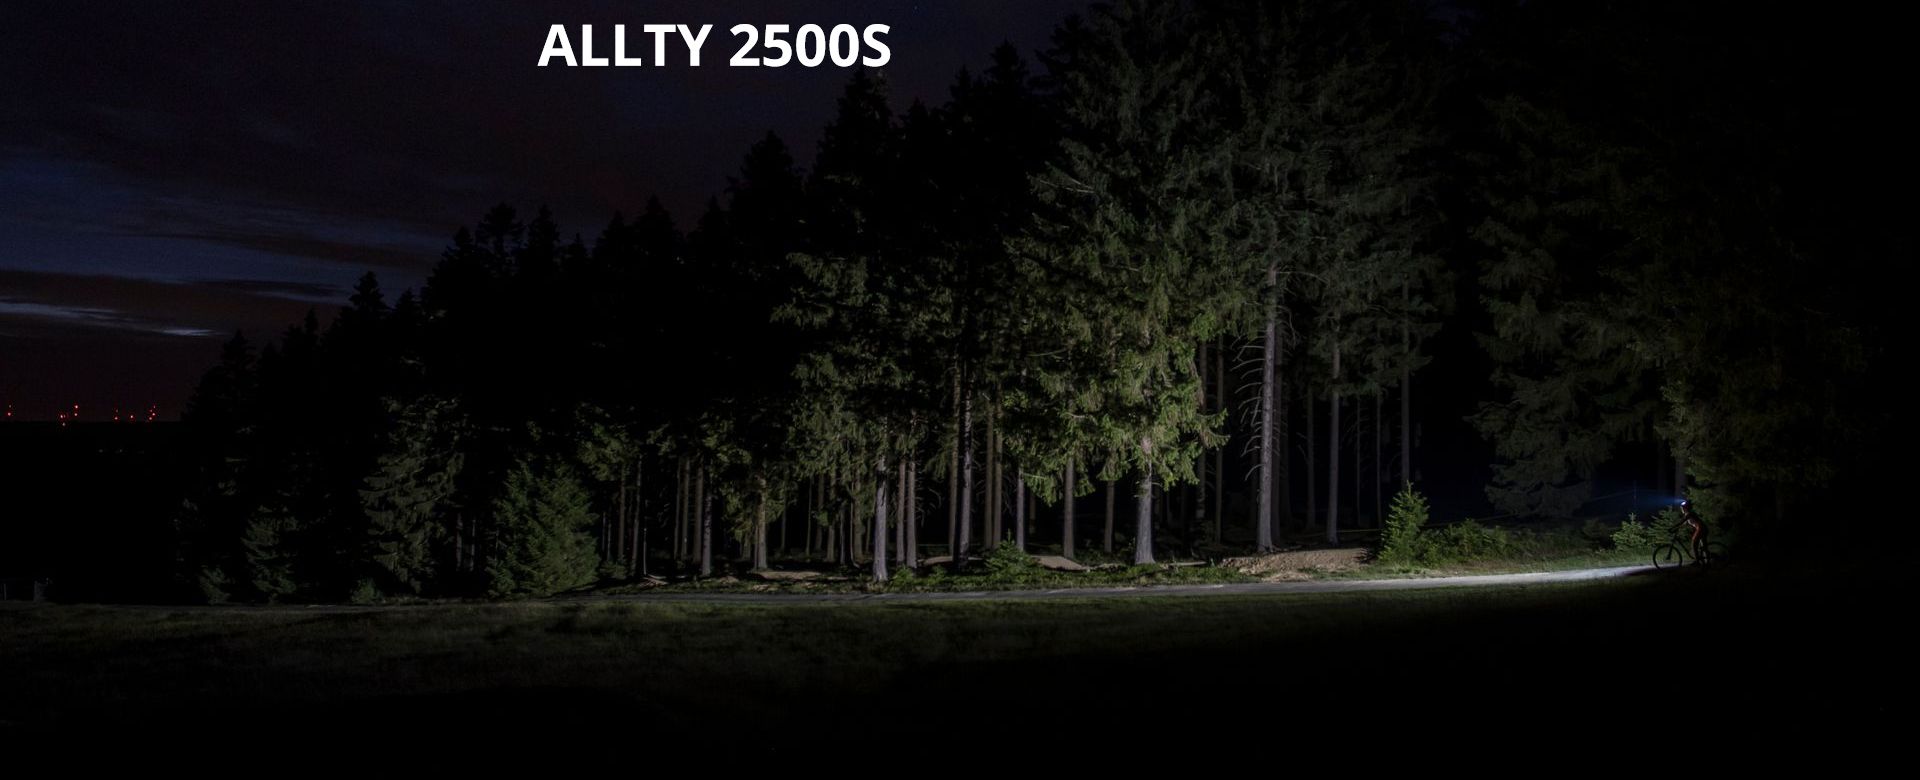 Magicshine Helmlampe Allty 2500S mit Radfahrer im Wald